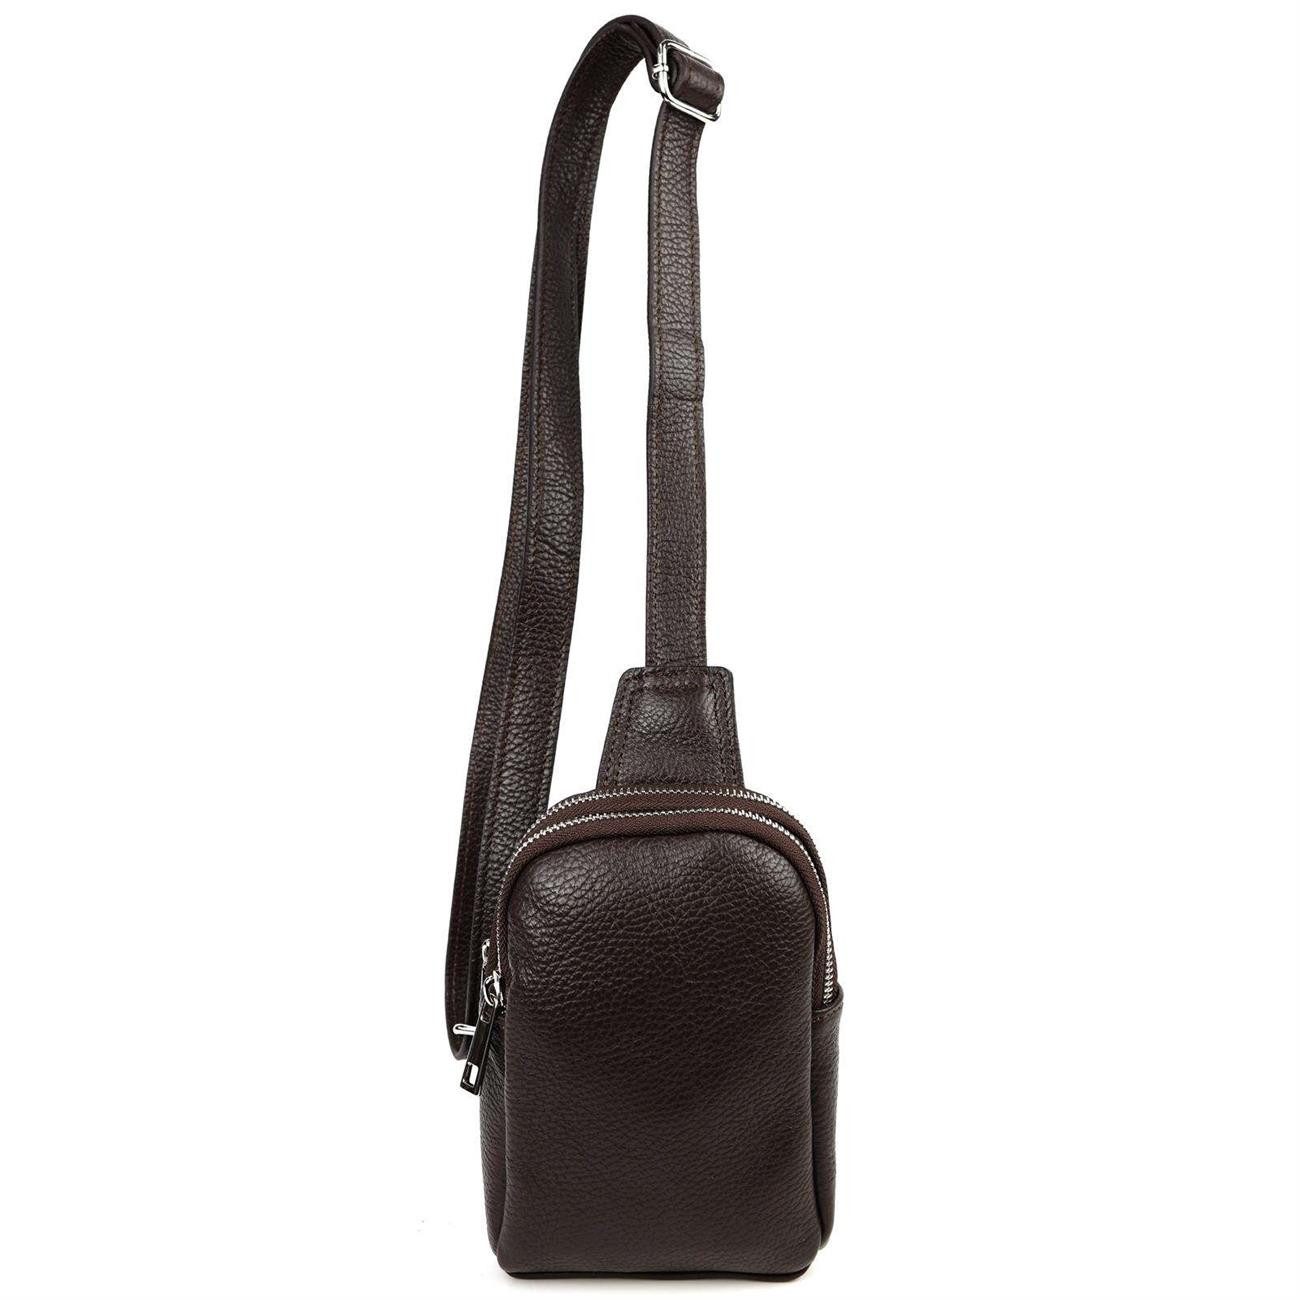 ITALYSHOP24 Schultertasche Unisex Leder Crossbody Bodybag Sling CrossOver Bag, Fächer